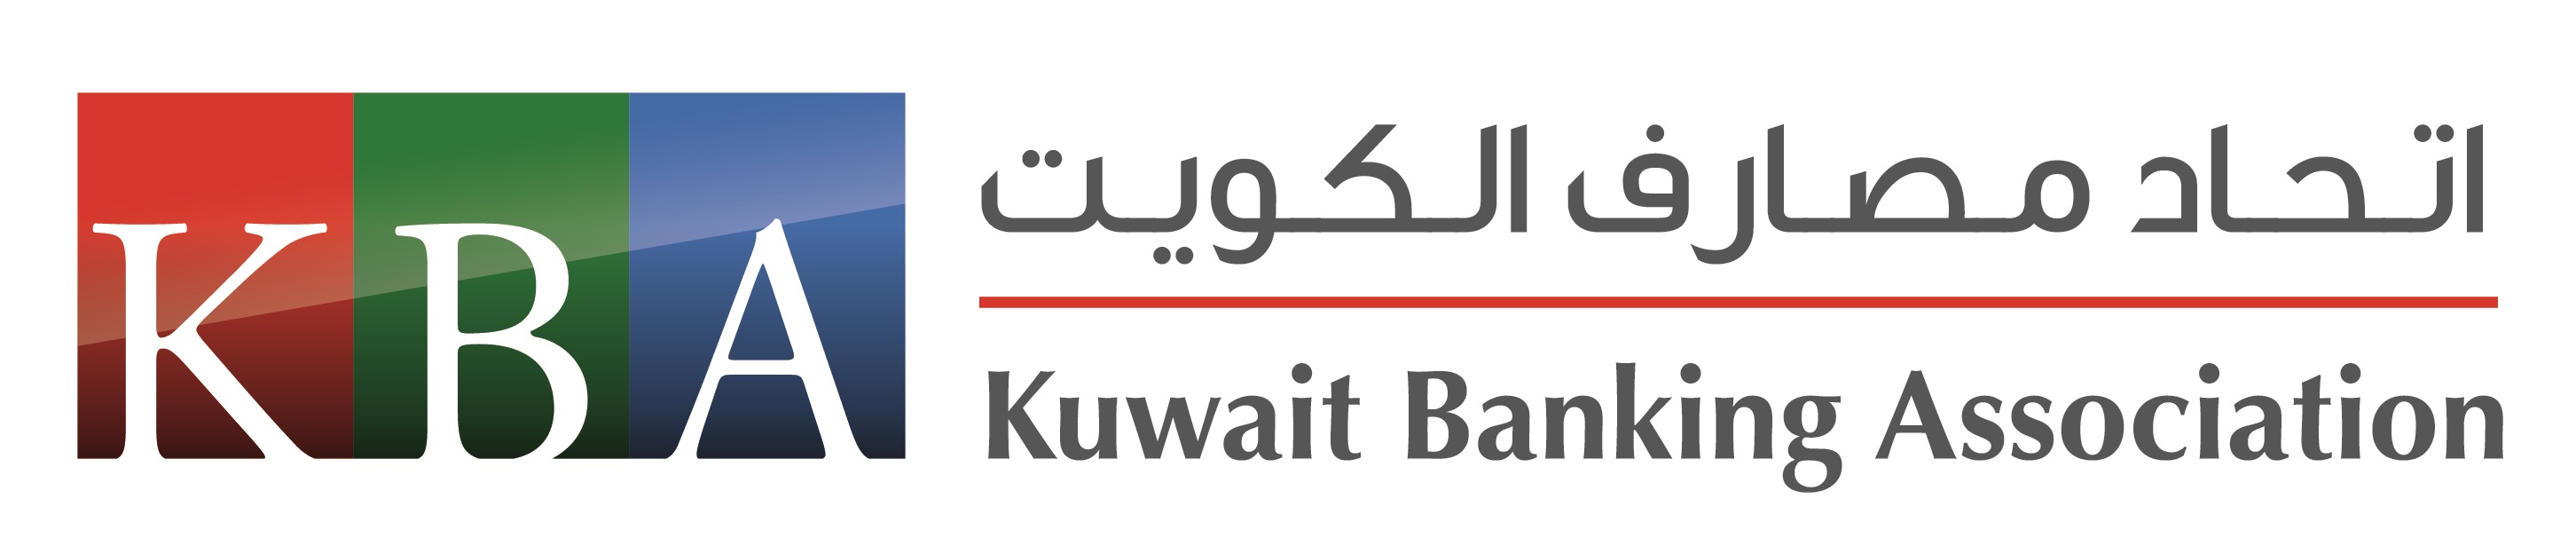 Kuwait Banking Association (KBA)